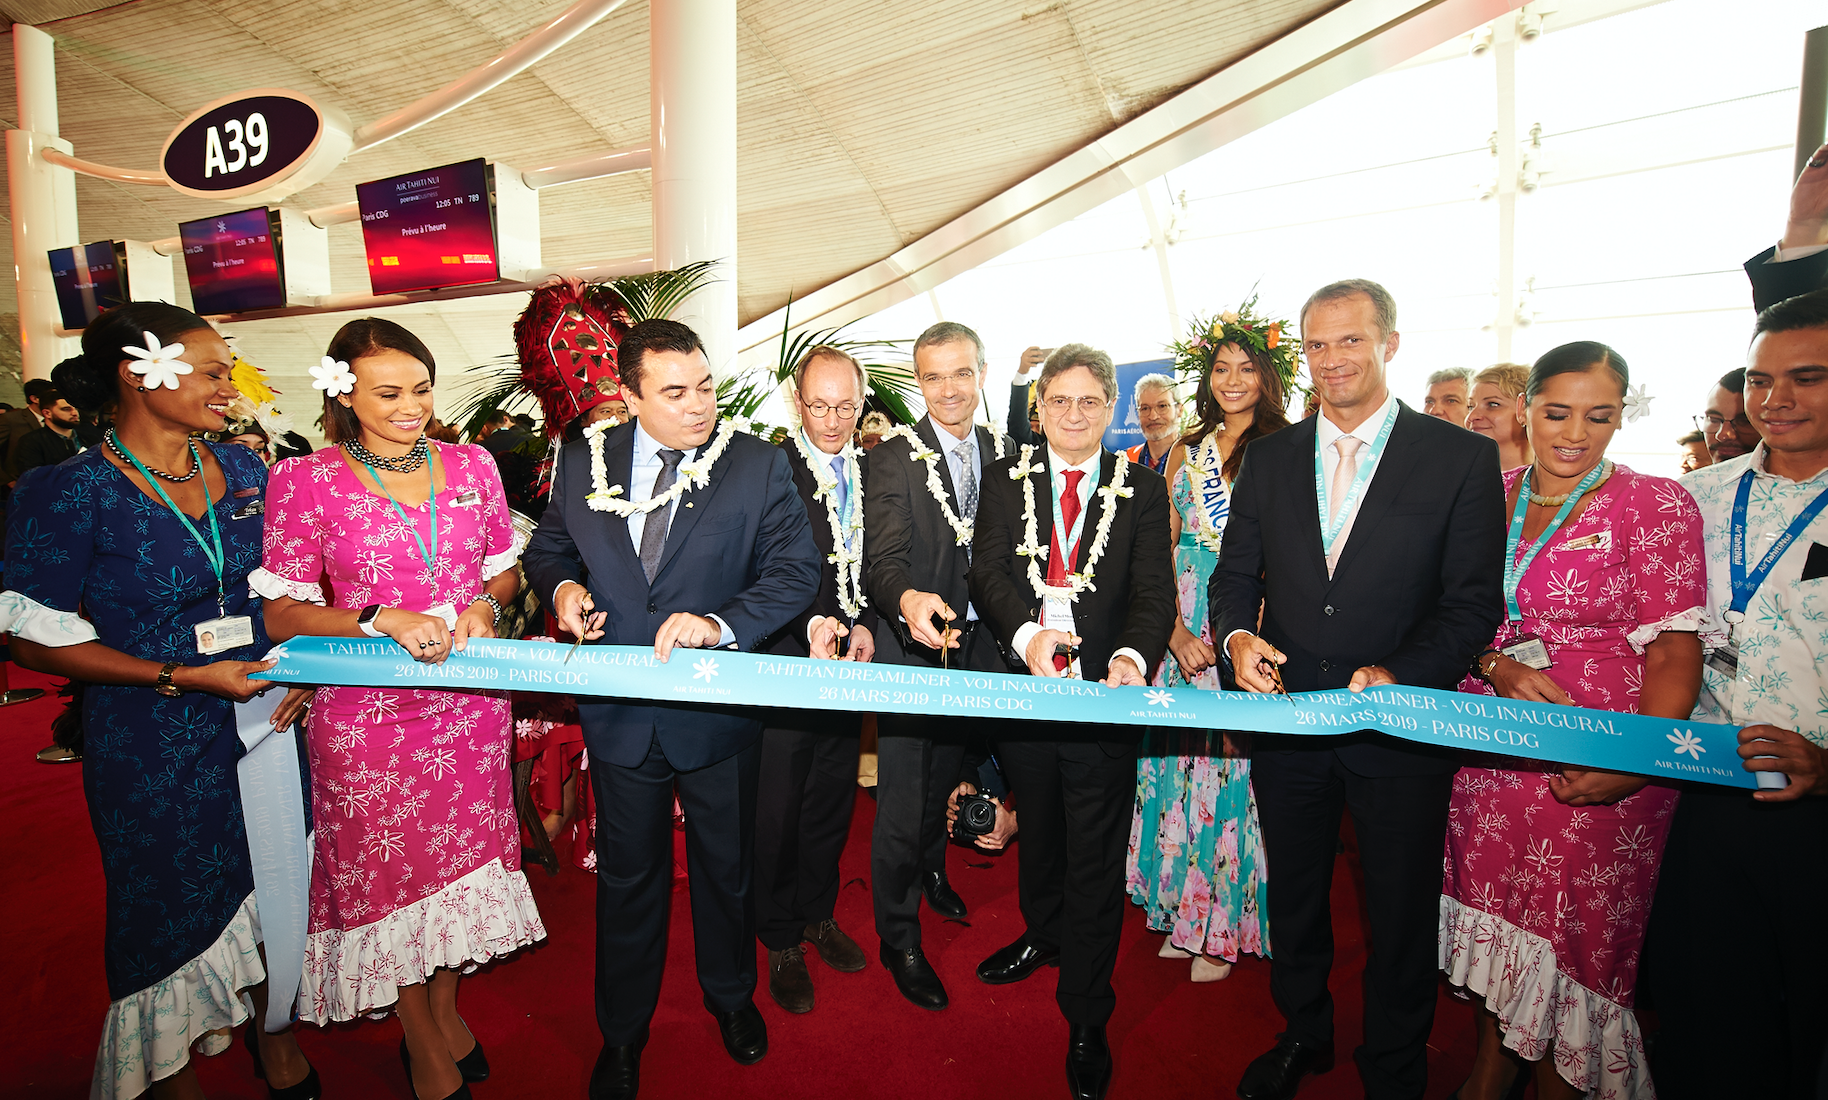 A l'inauguration du nouveau Dreamliner d'Air Tahiti Nui, mardi 26 mars à Paris-CDG © ATN